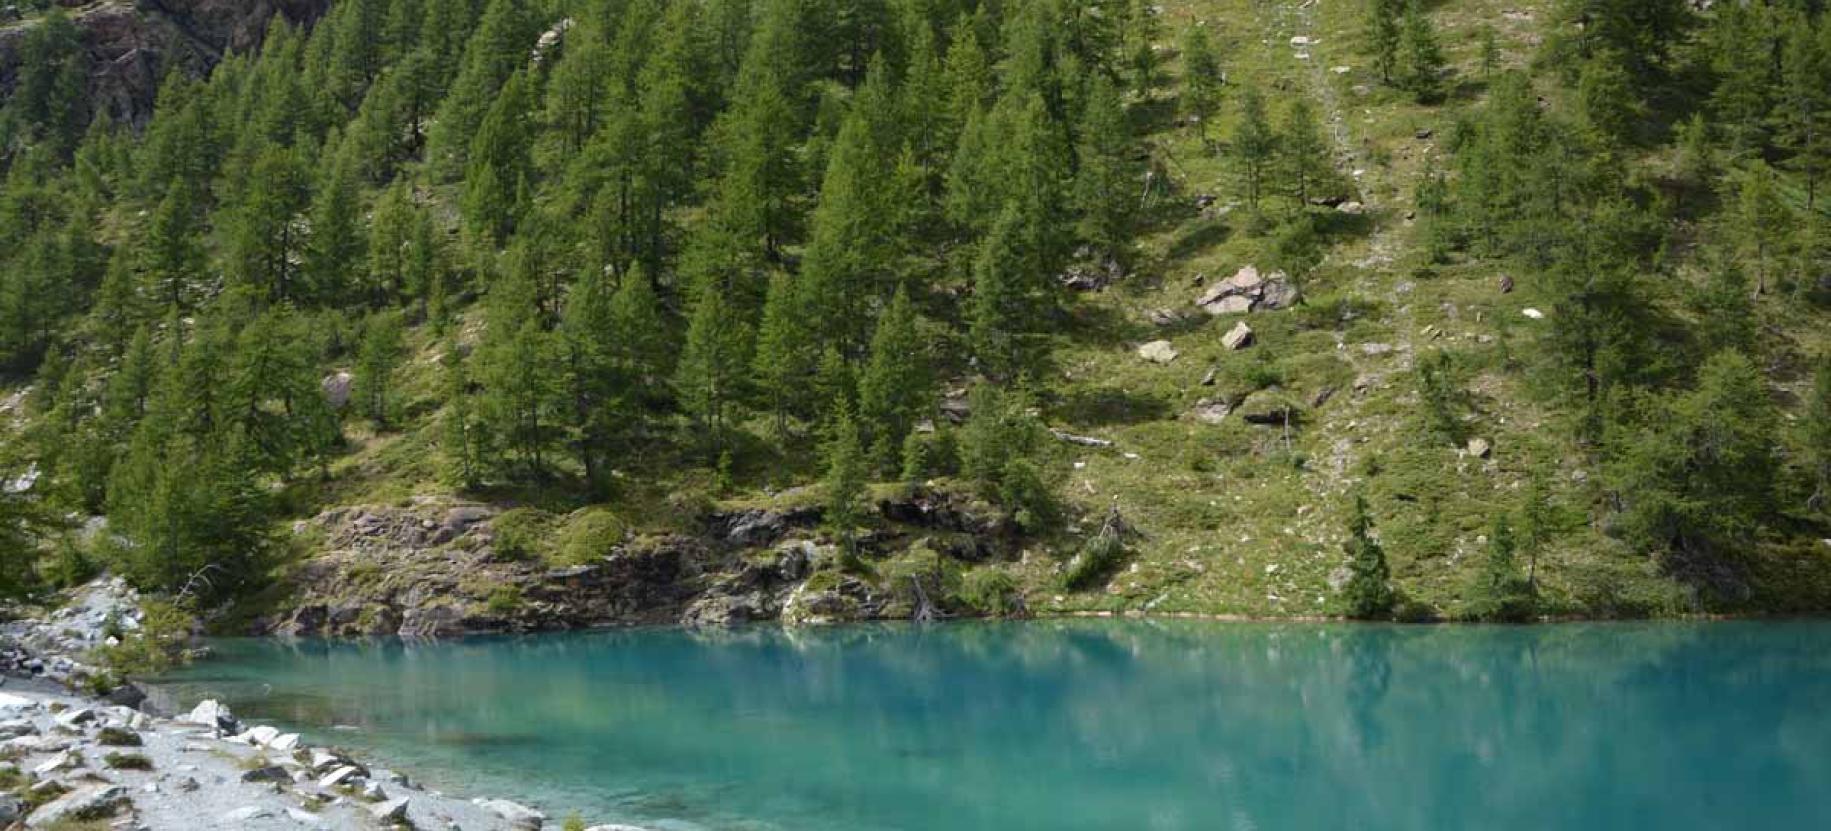 Lago Blu, a turquoise jewel in the ice